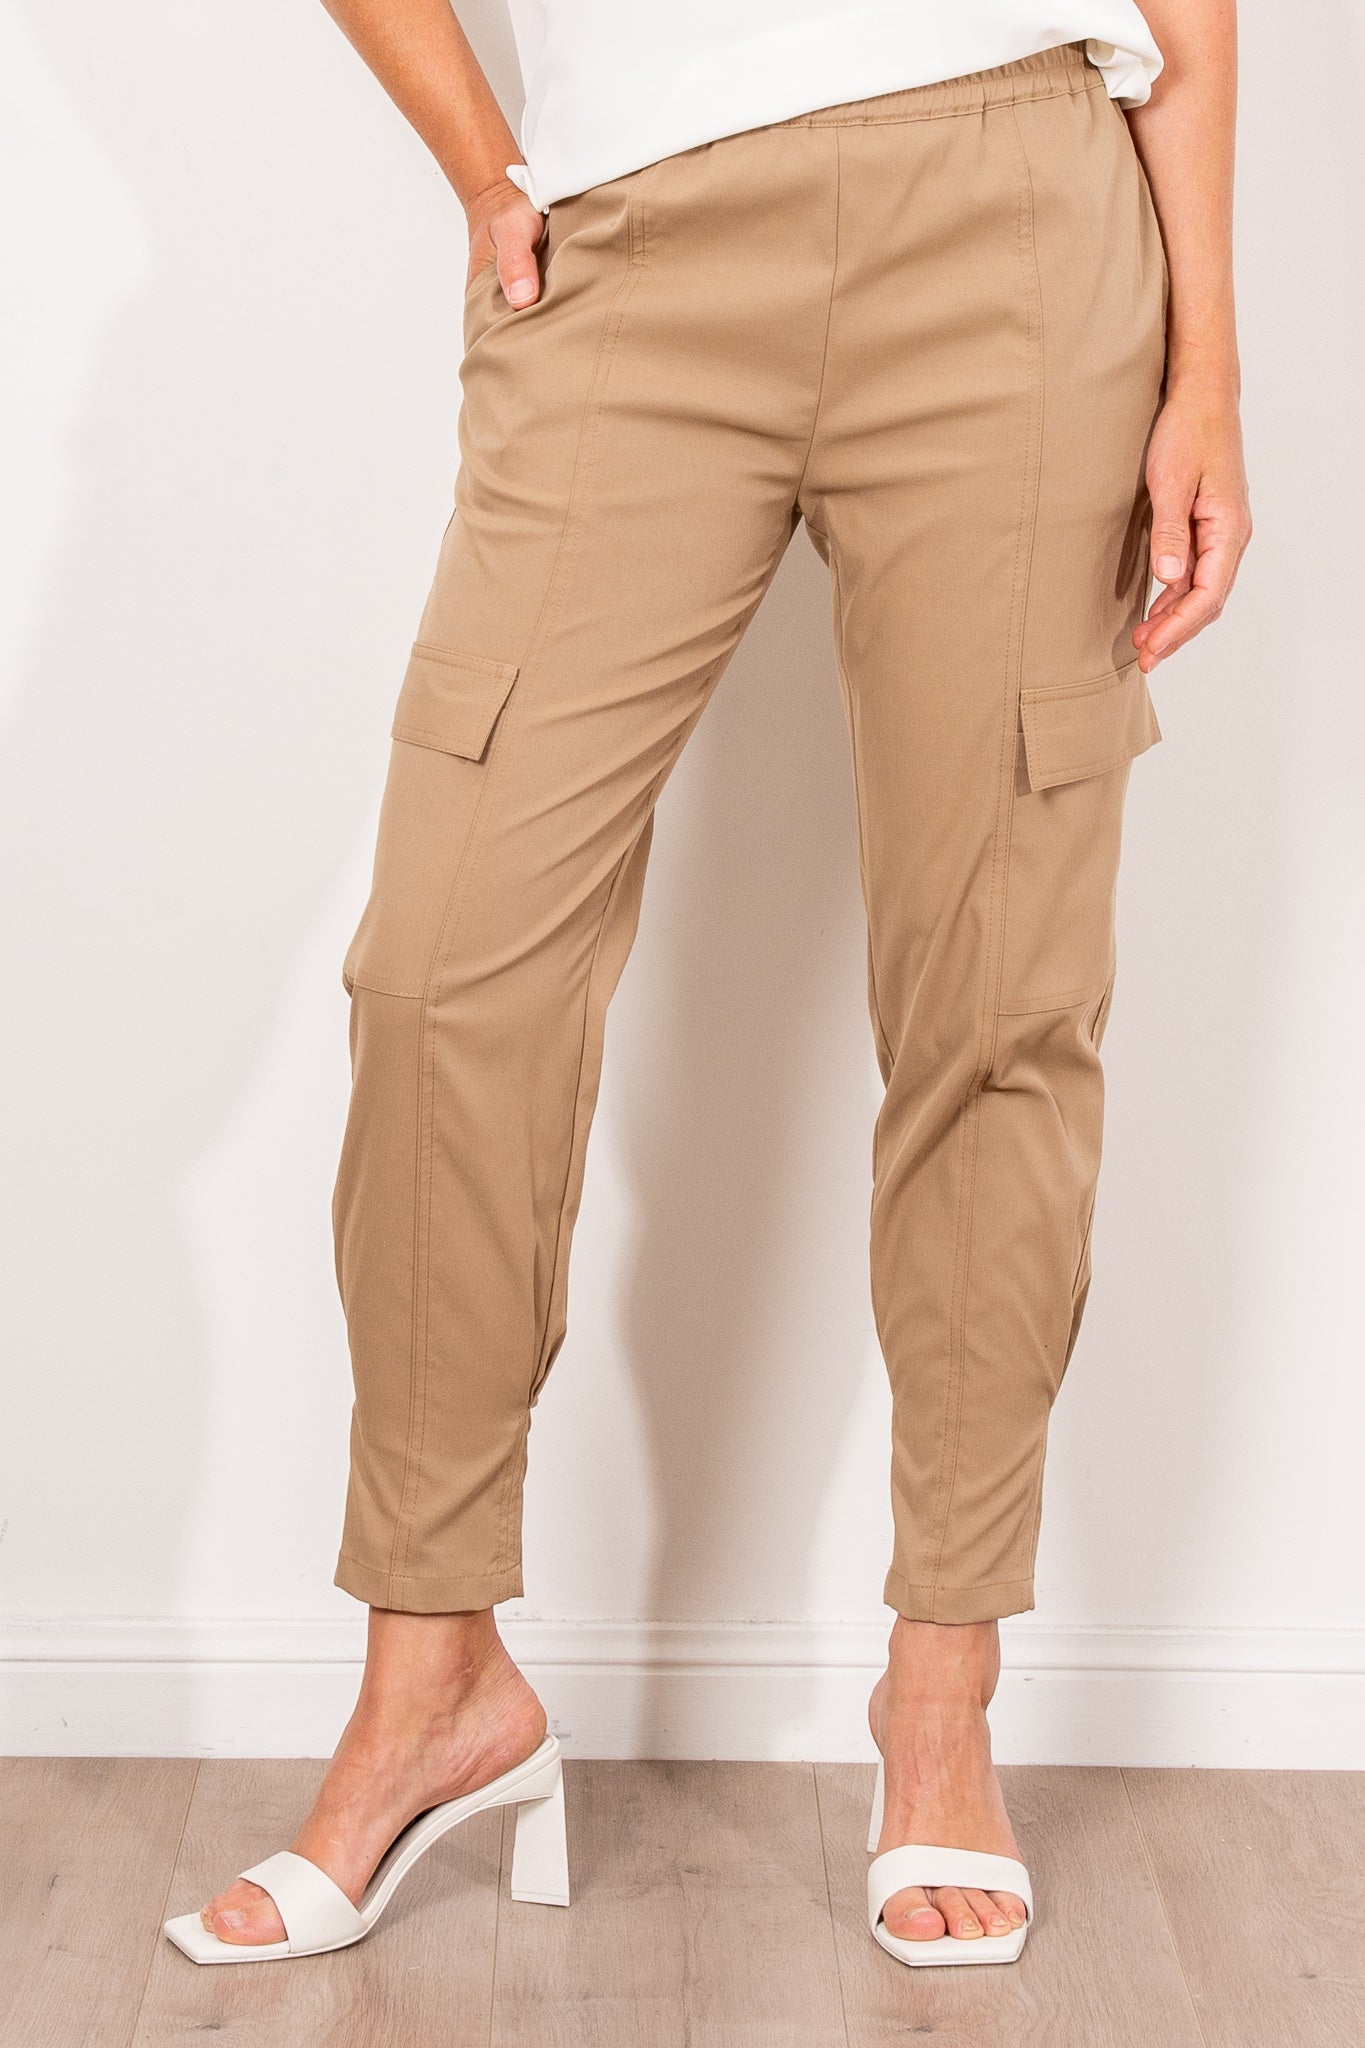 Latest women pants/trouser/plazo designing idea 2019| Stylish trouser  design - YouTube | Stylish pants women, Pants women fashion, Designer pants  fashion